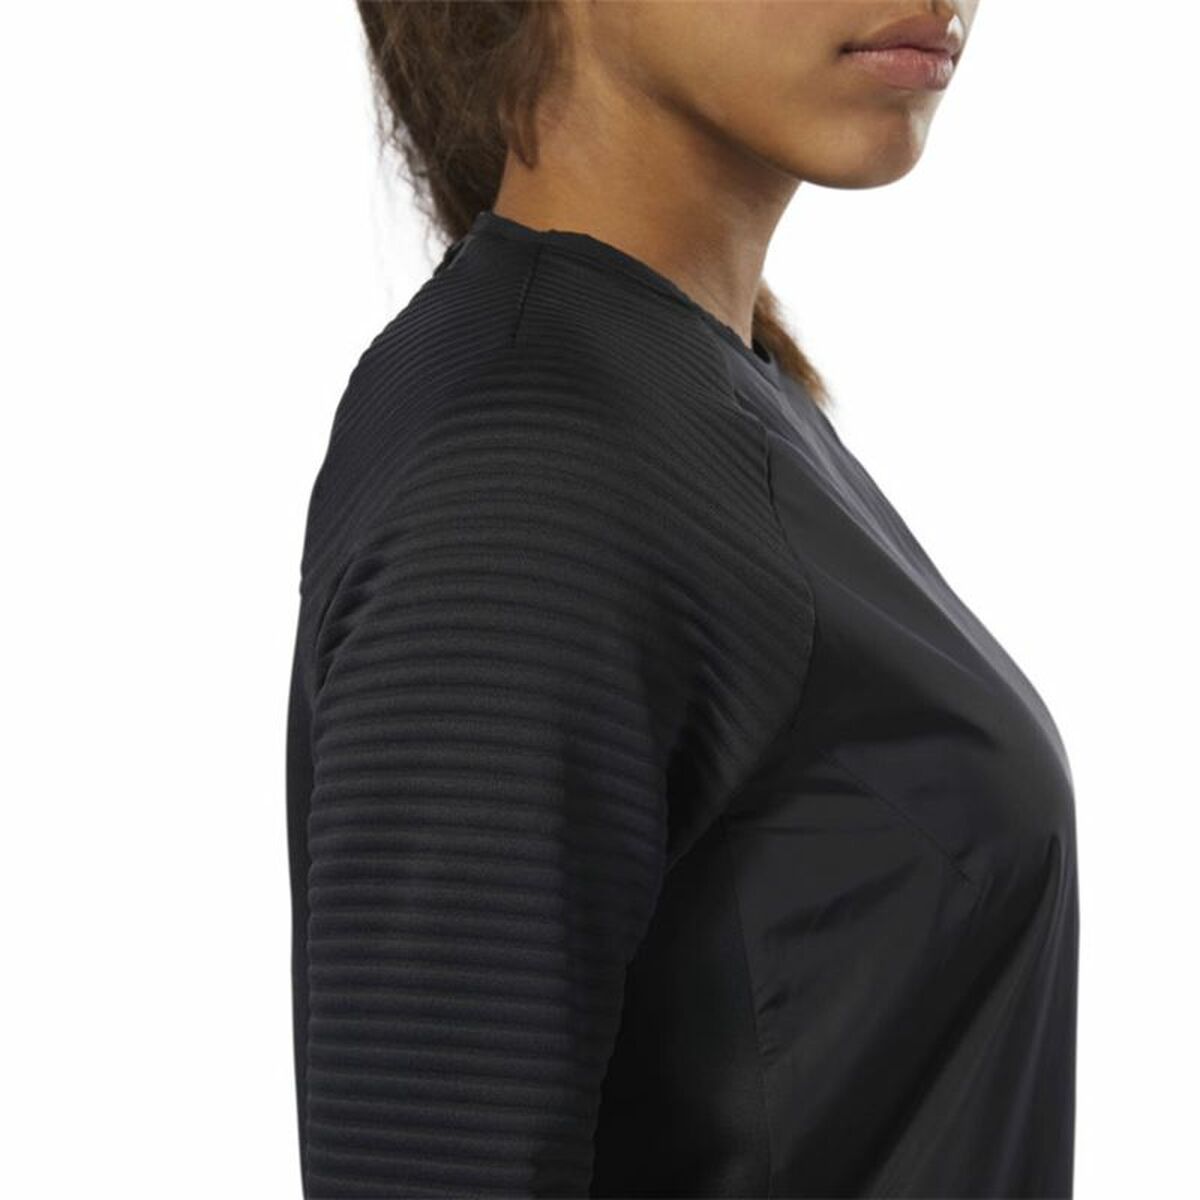 Women’s Long Sleeve T-Shirt Reebok Thermowarm Deltapeak Black